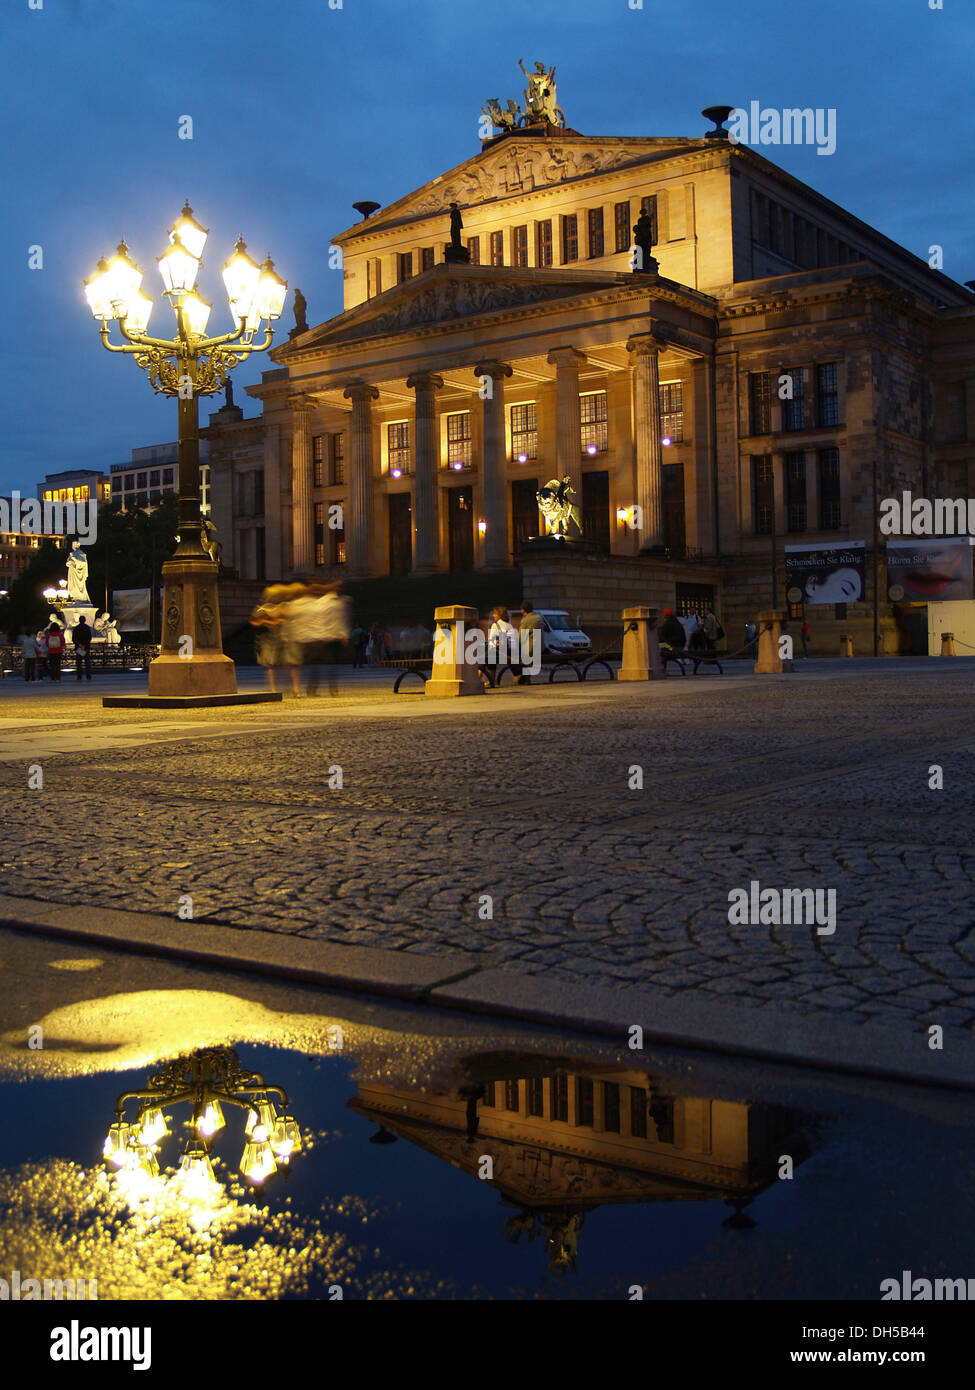 The Konzerthaus concert hall, Gendarmenmarkt square, Berlin Stock Photo